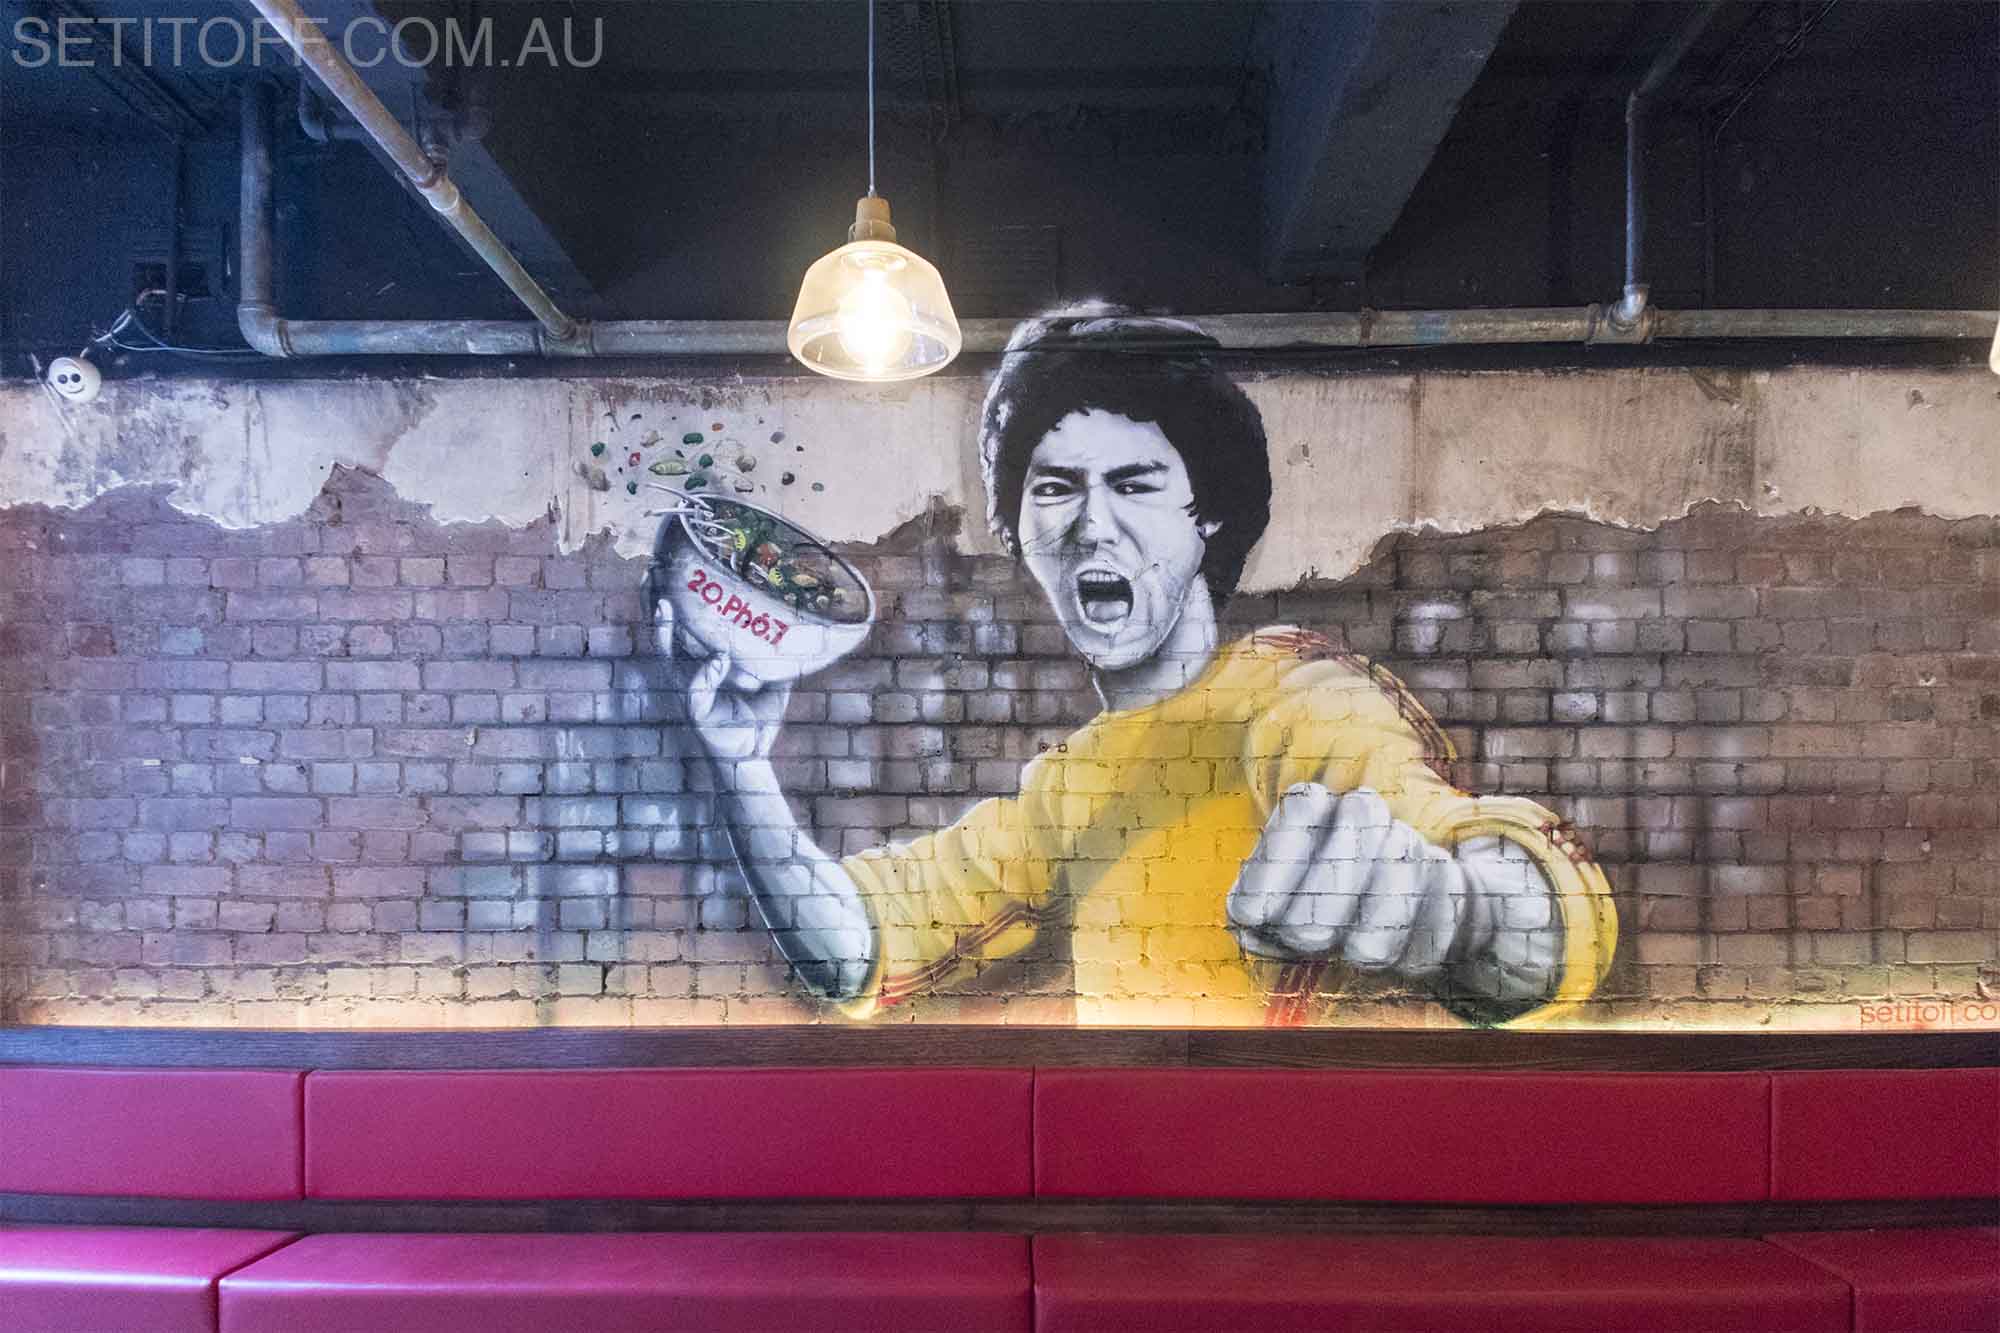 Graffiti mural of Bruce Lee